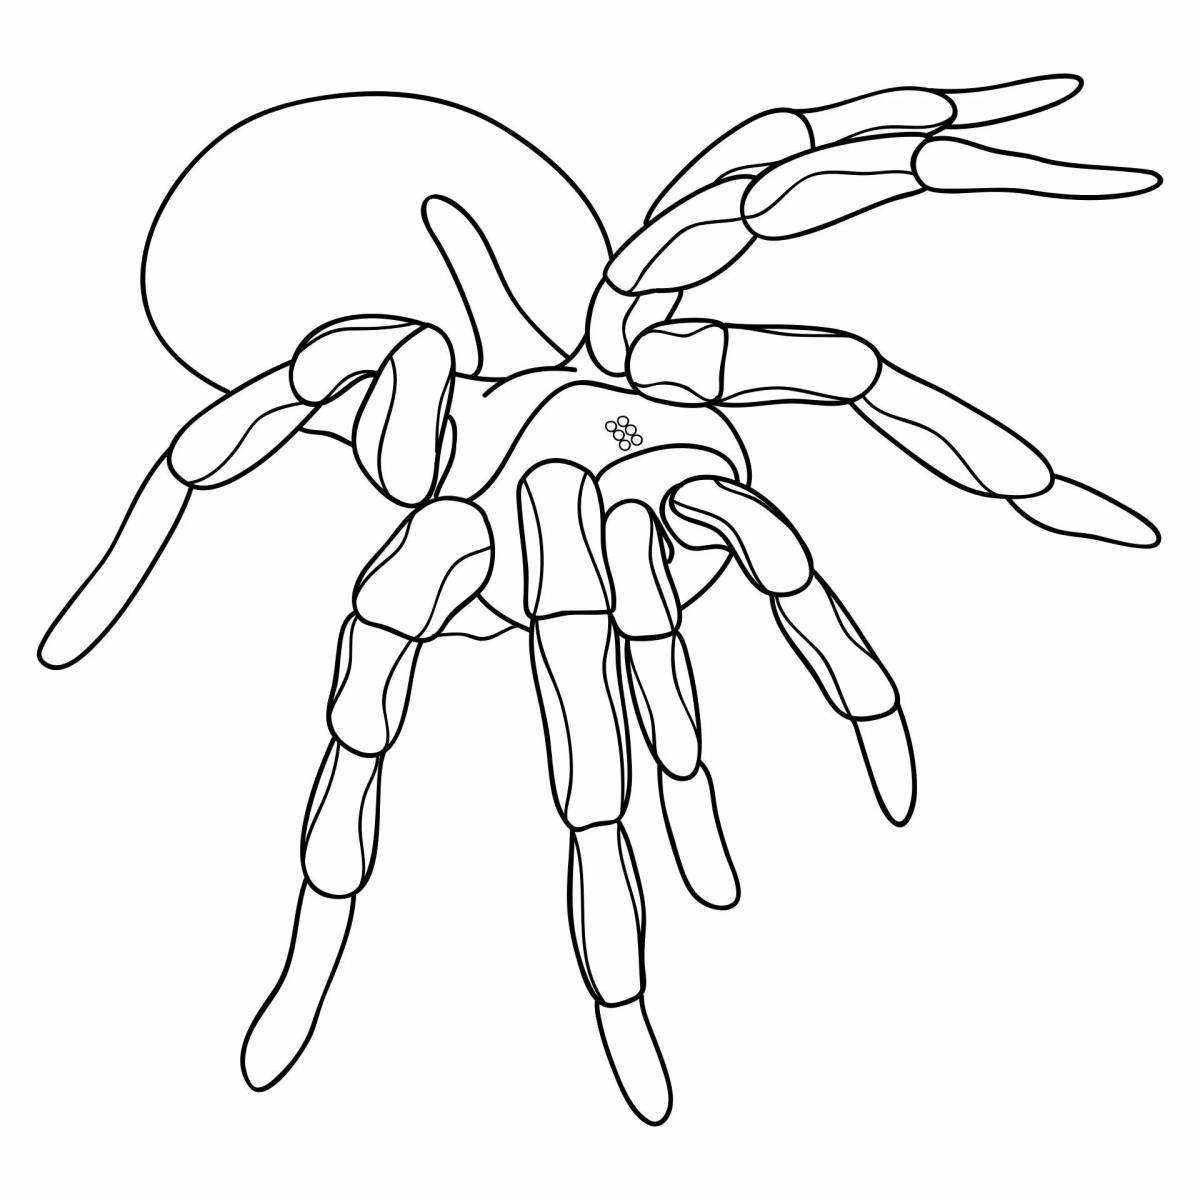 Раскраска величественный паук тарантул